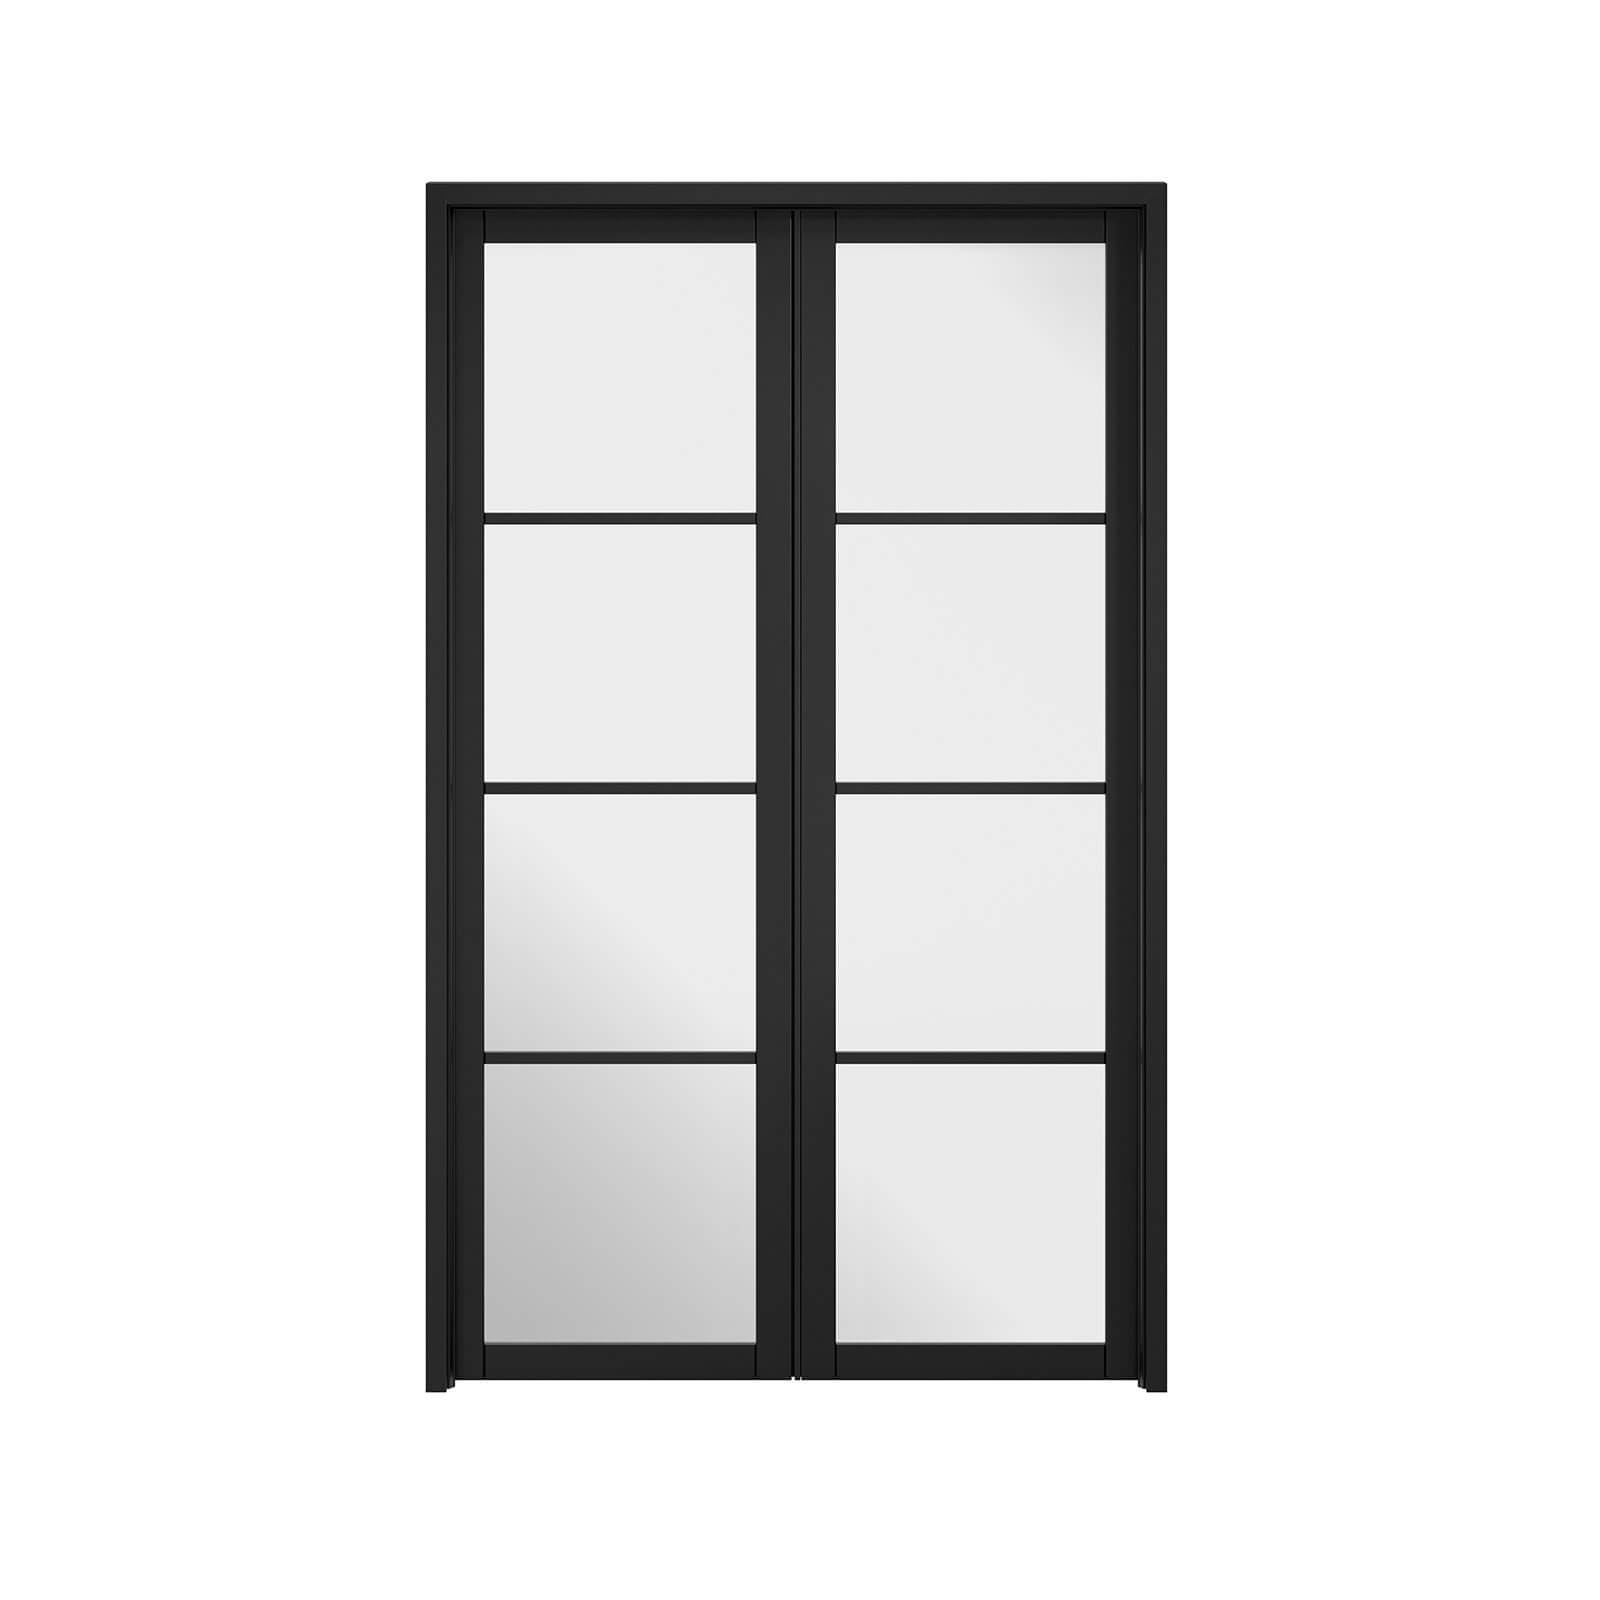 Soho Room Divider W4 - Black - 2031 x 1246 x 35mm